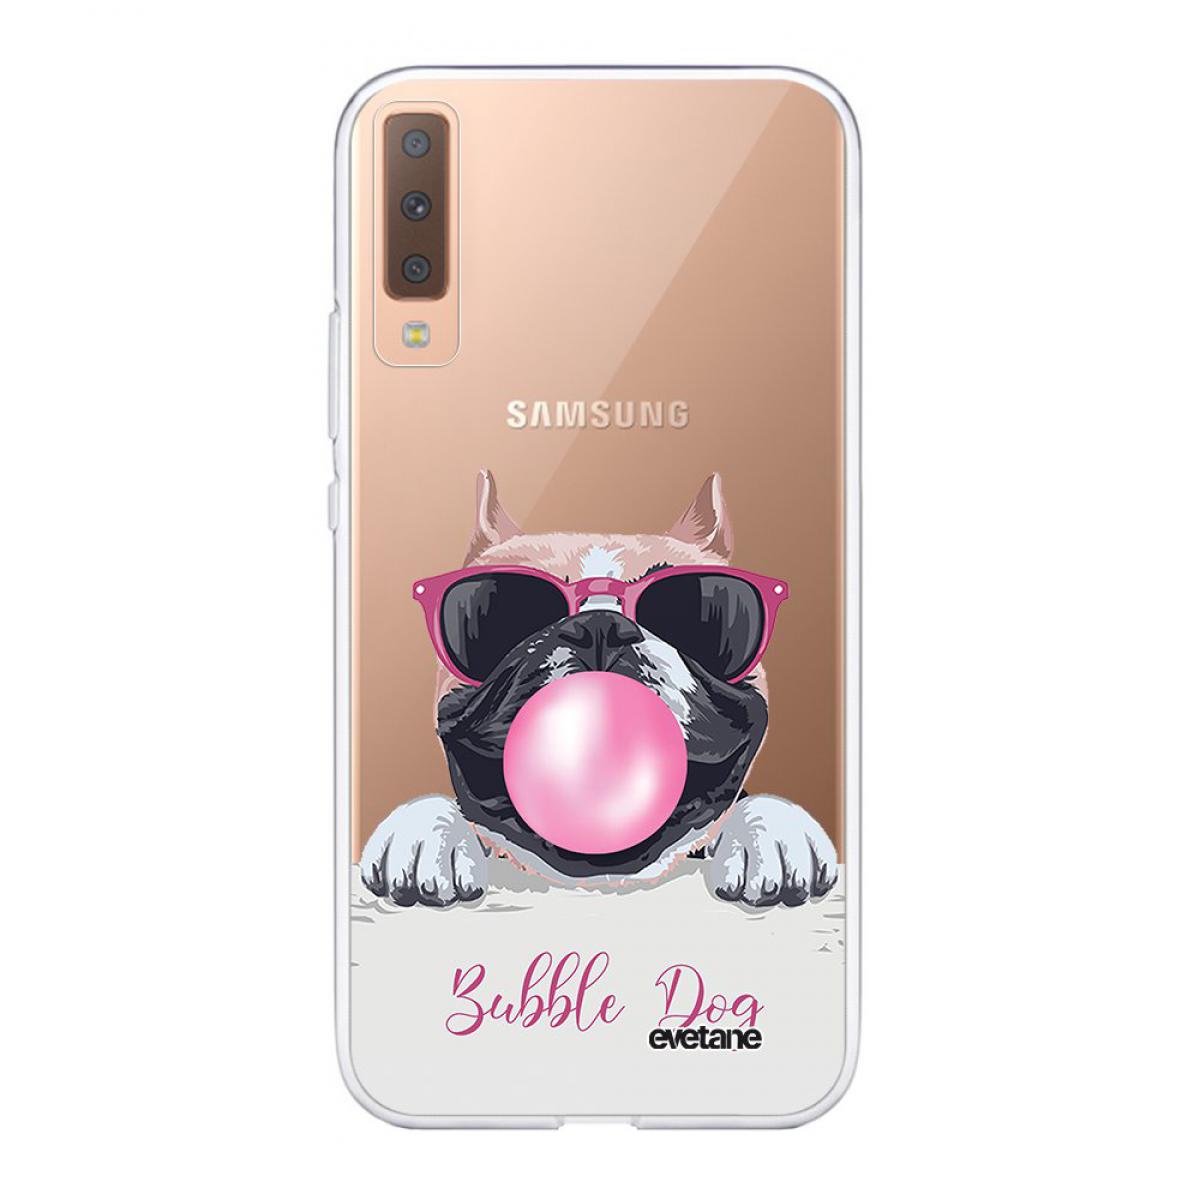 Evetane - Coque Samsung Galaxy A7 2018 360 intégrale transparente Bubble Dog Tendance Evetane - Coque, étui smartphone